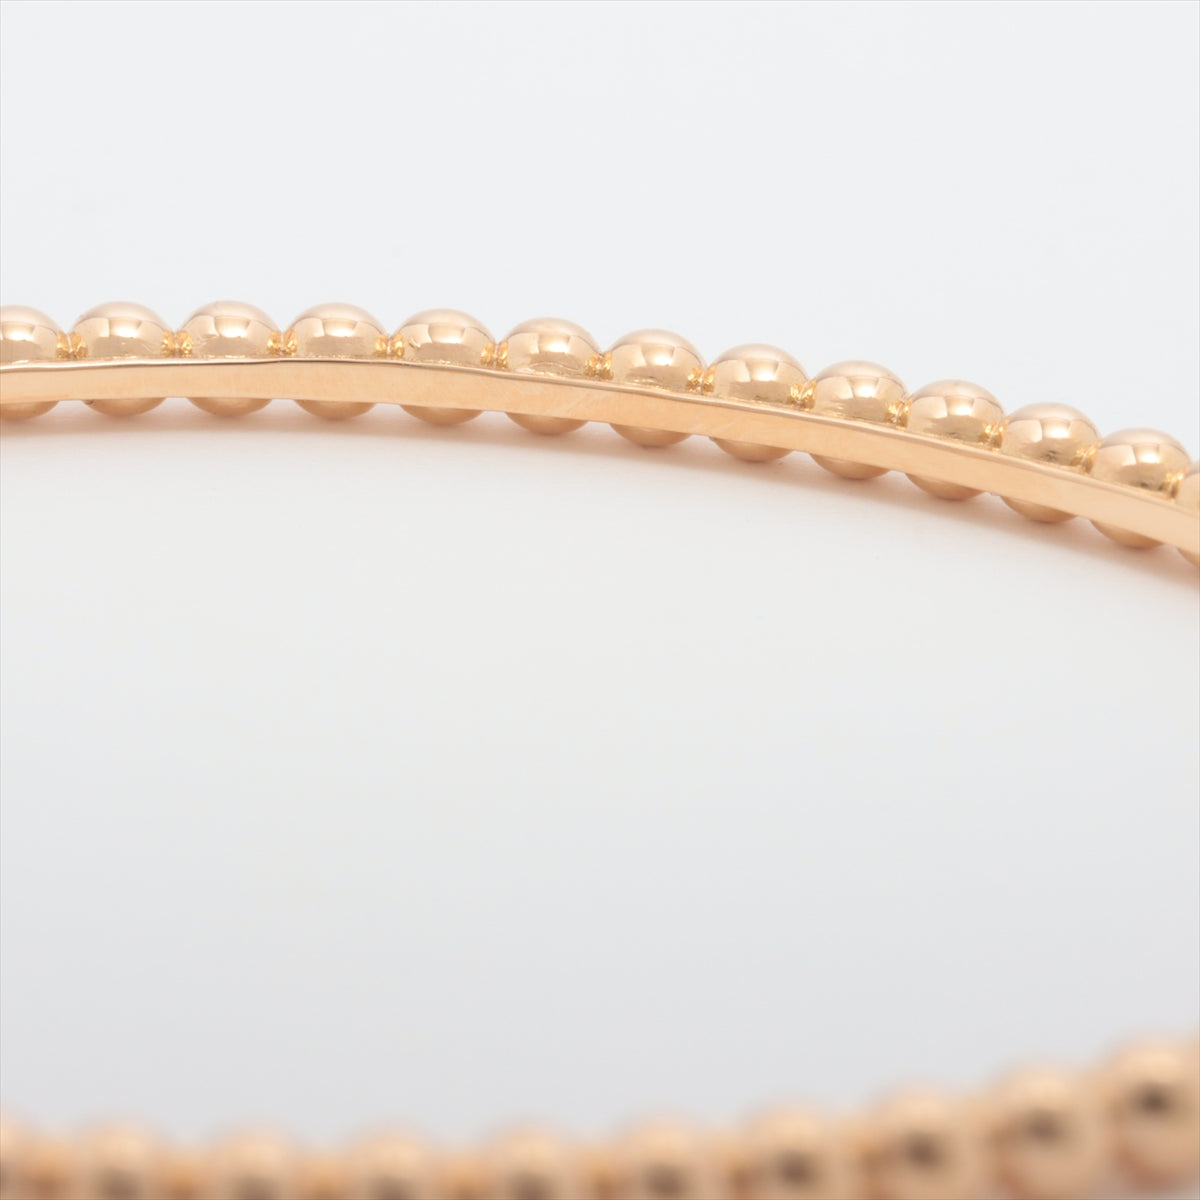 Van Cleef & Arpels Perle Golden Pearl Bracelet 750 (PG) 21.6g L VCARO95800